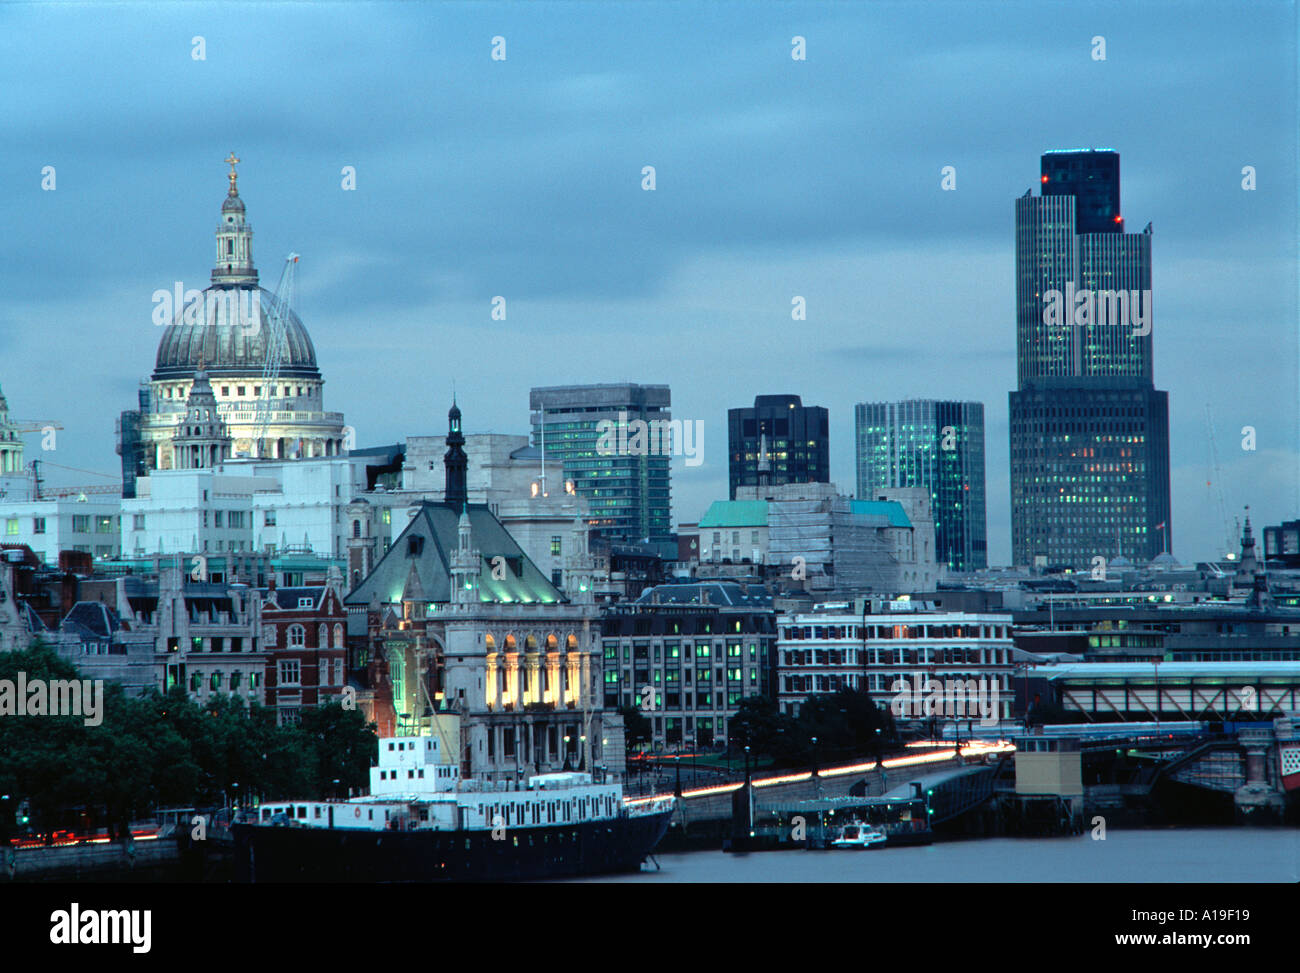 London  City skyline  year 2000,City of London England Stock Photo